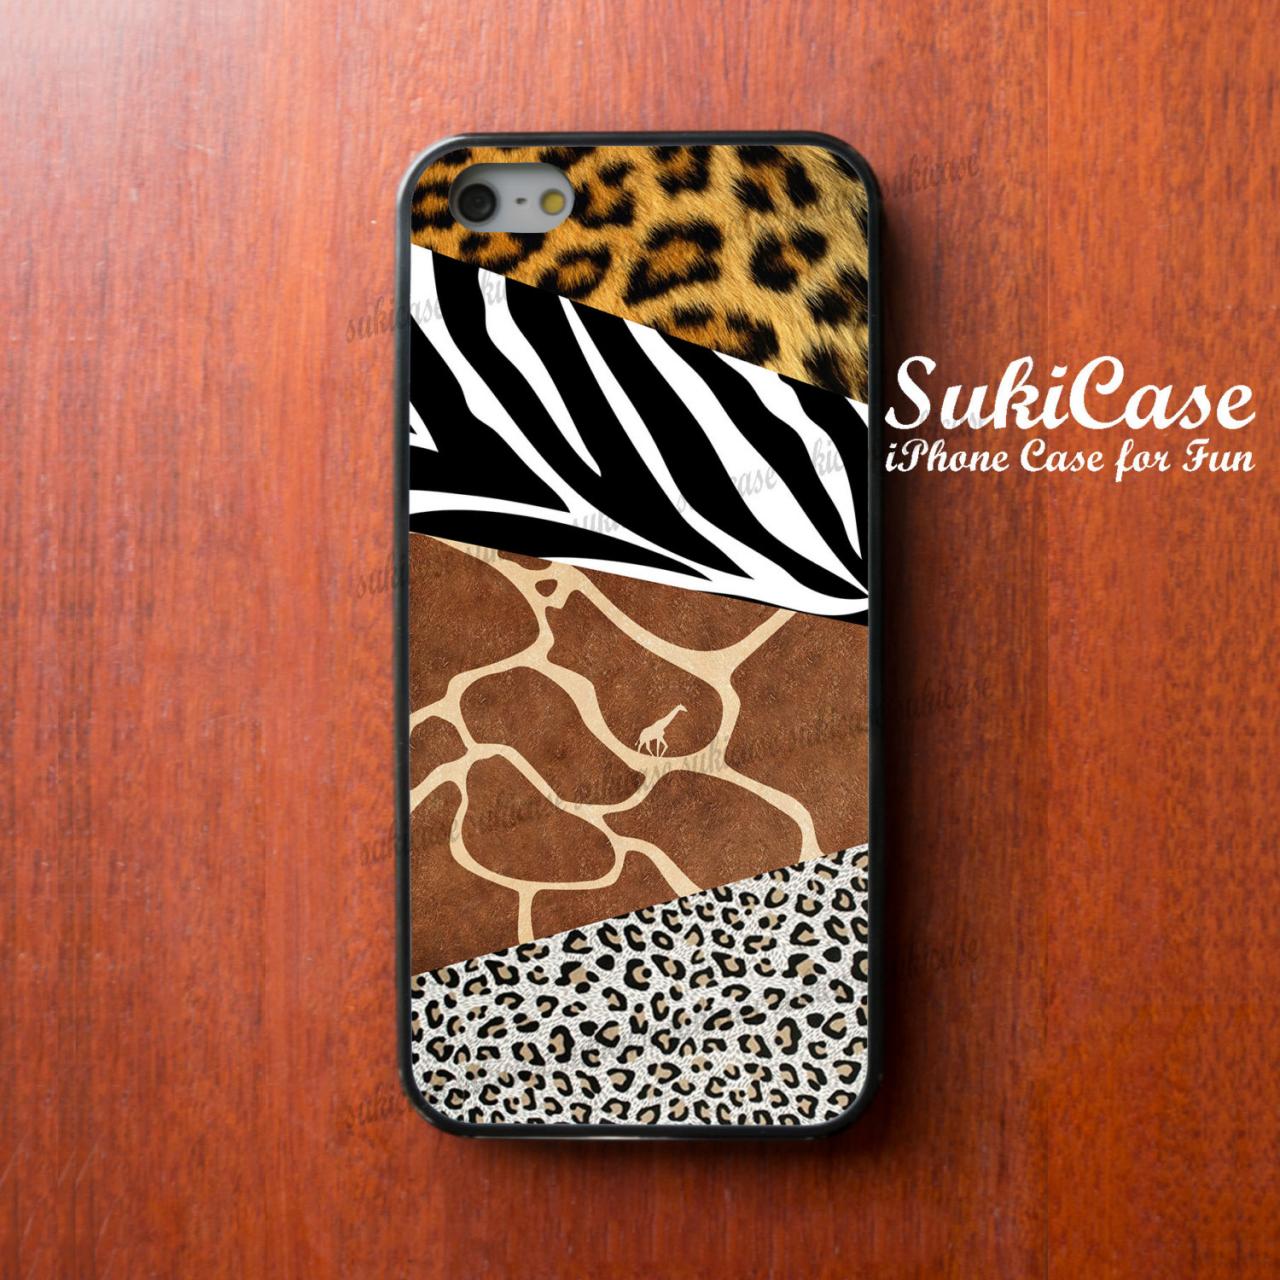 Iphone 5s Case Safari Skin White Tiger Leopard Zebra Giraffe Iphone Case Iphone 5 Case Iphone 4 Case Samsung Galaxy S4 Cover Iphone 5c 4s